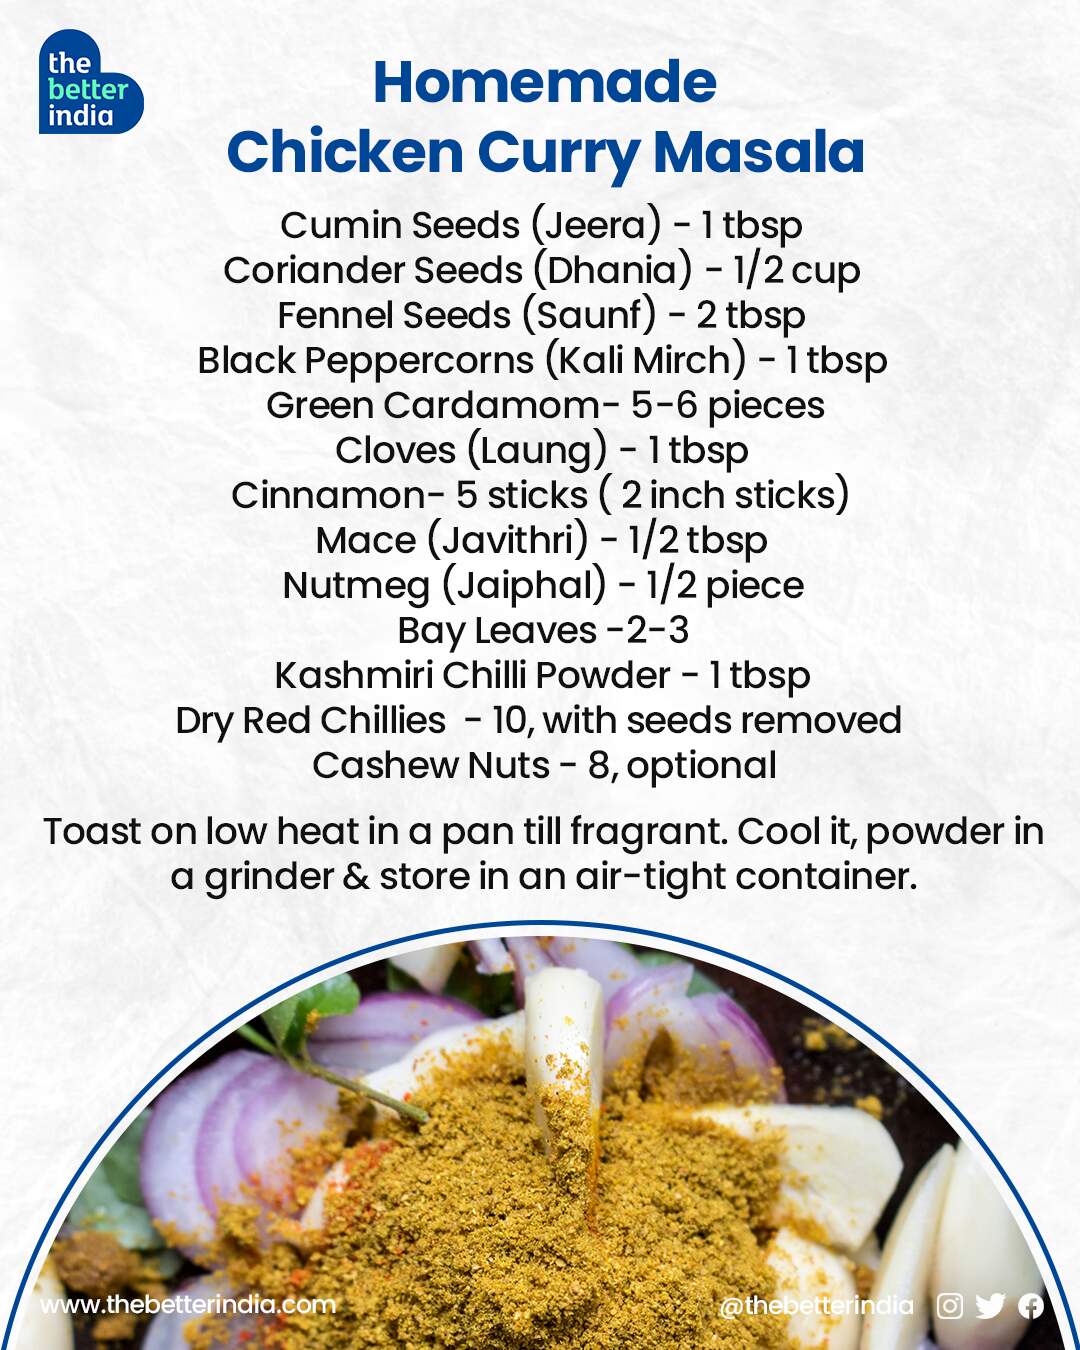 Homemade chicken curry masala recipe